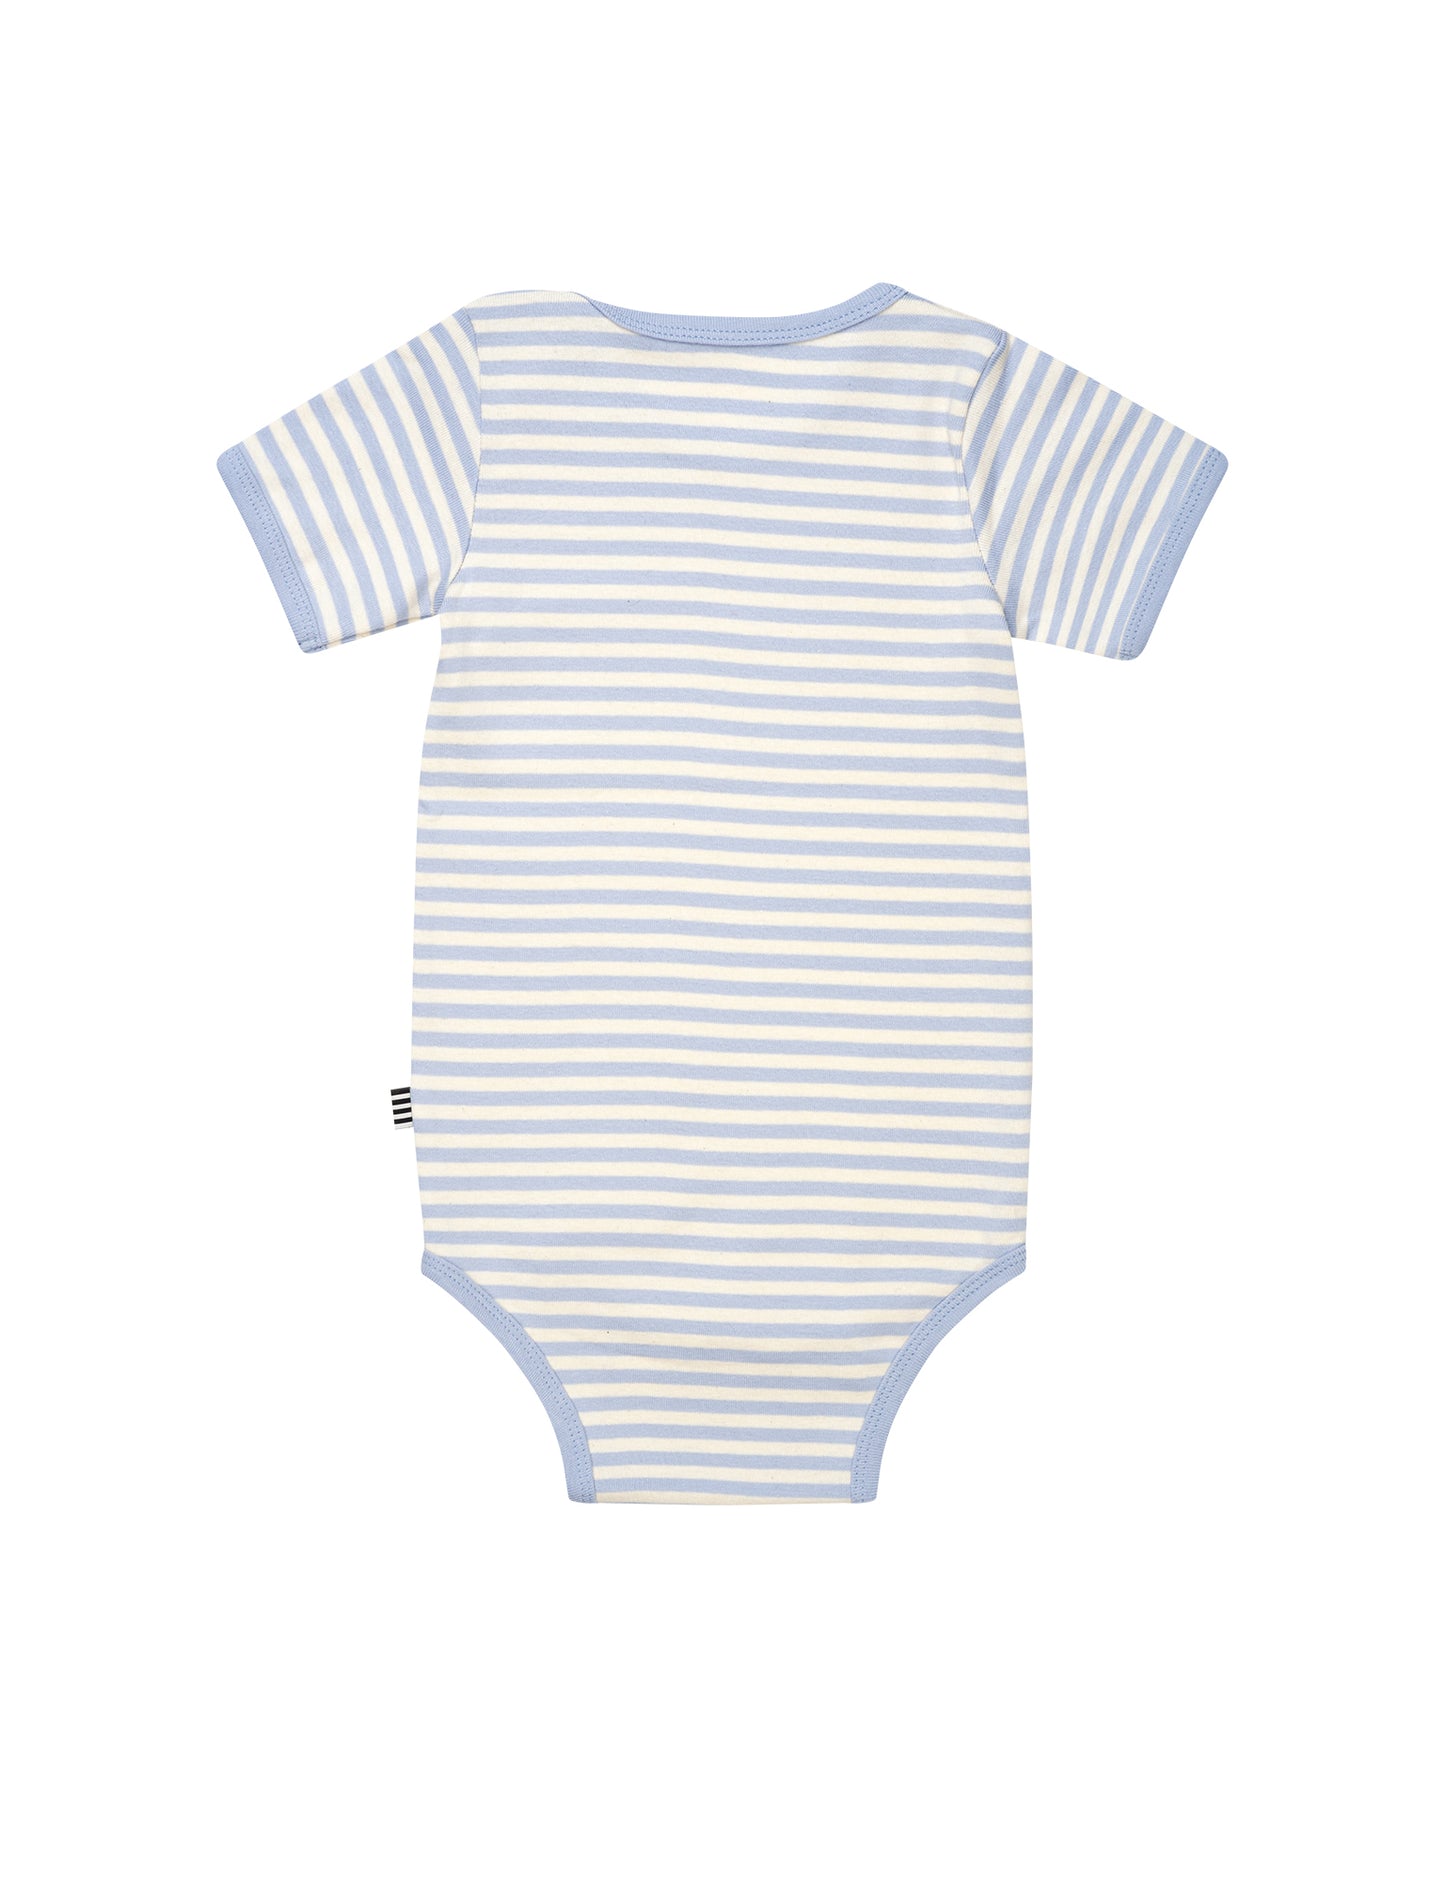 Soft Duo Striped Body Short Sleeve, Off White/Zen Blue